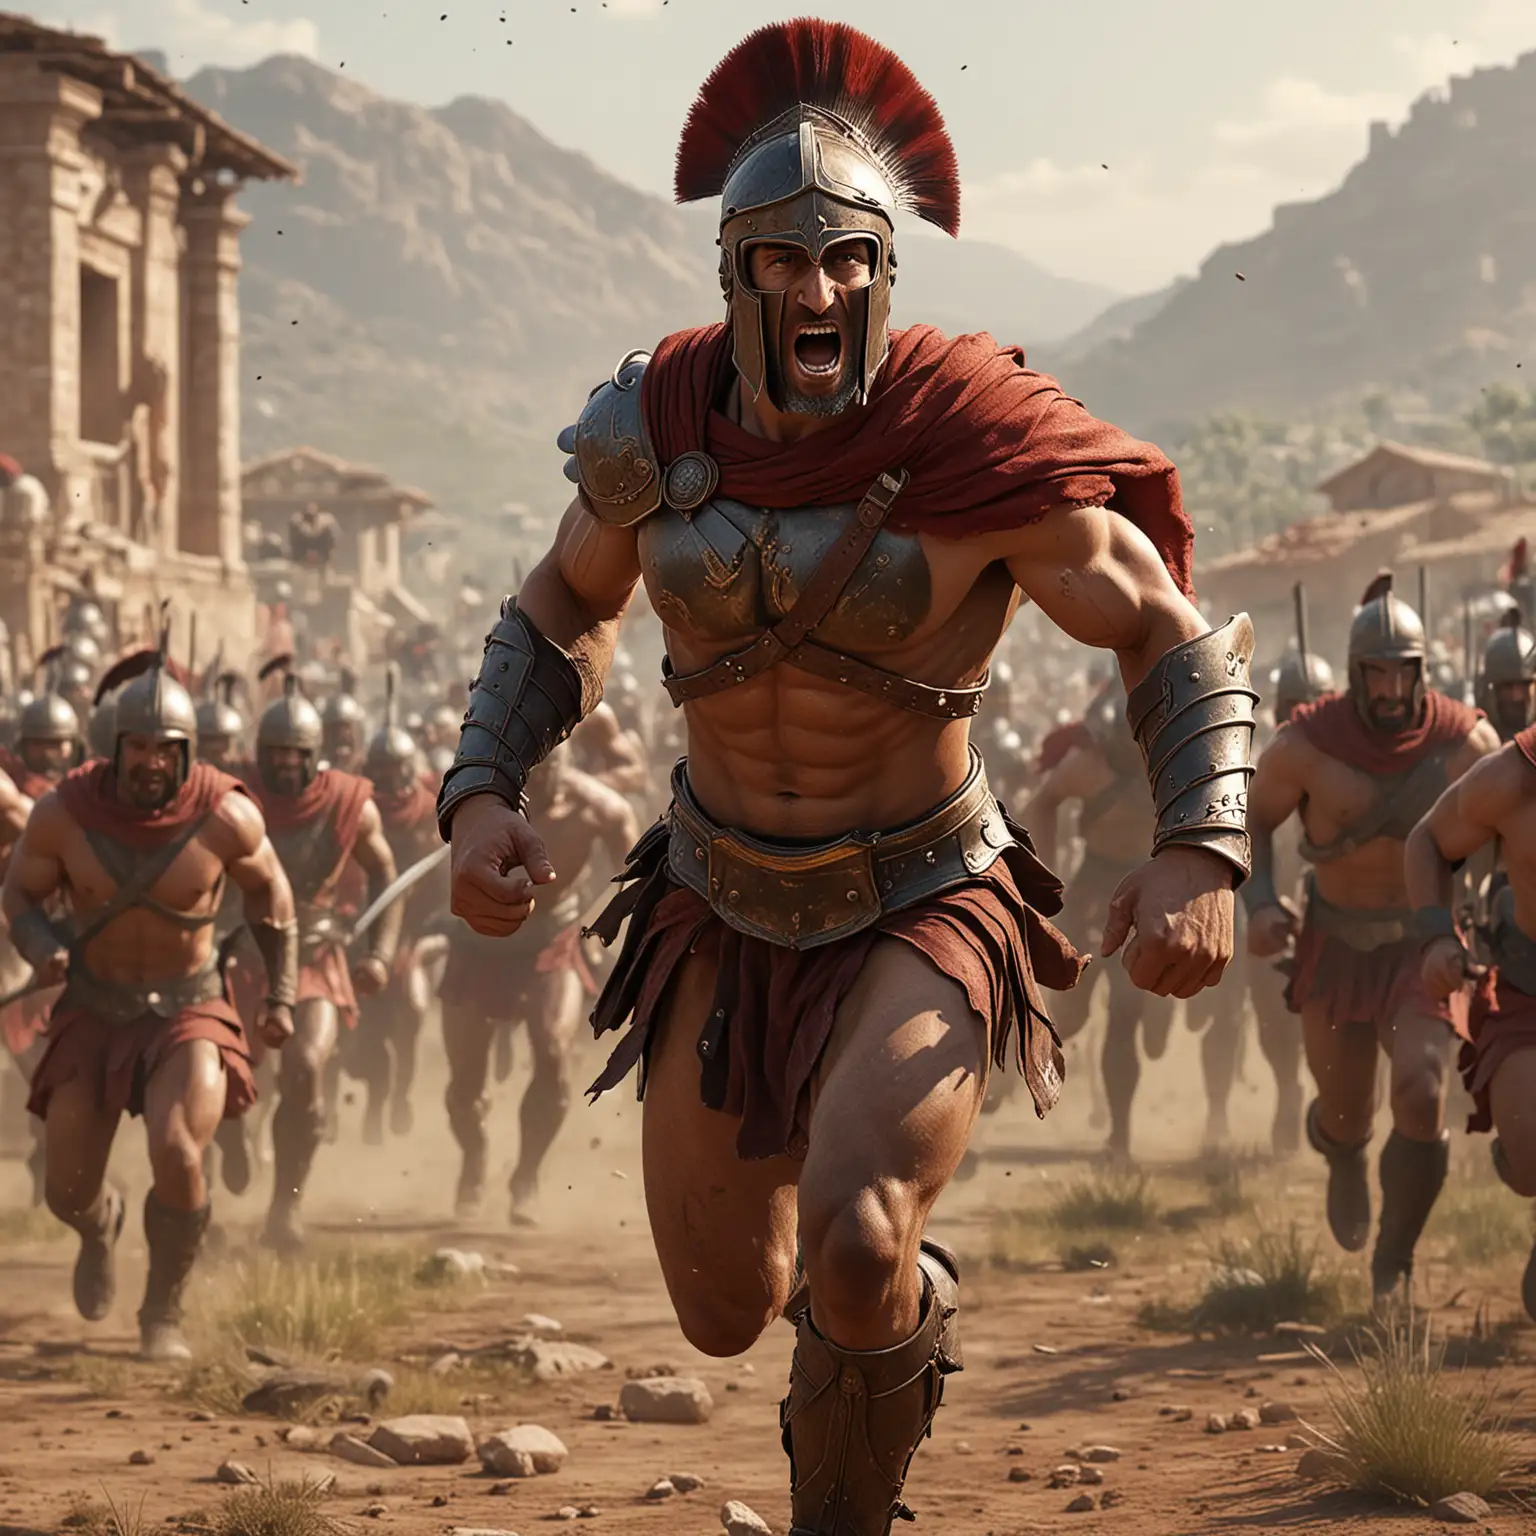 Spartan Warrior in Crimson and Bronze Armor Sprinting Through Grandiose Architecture